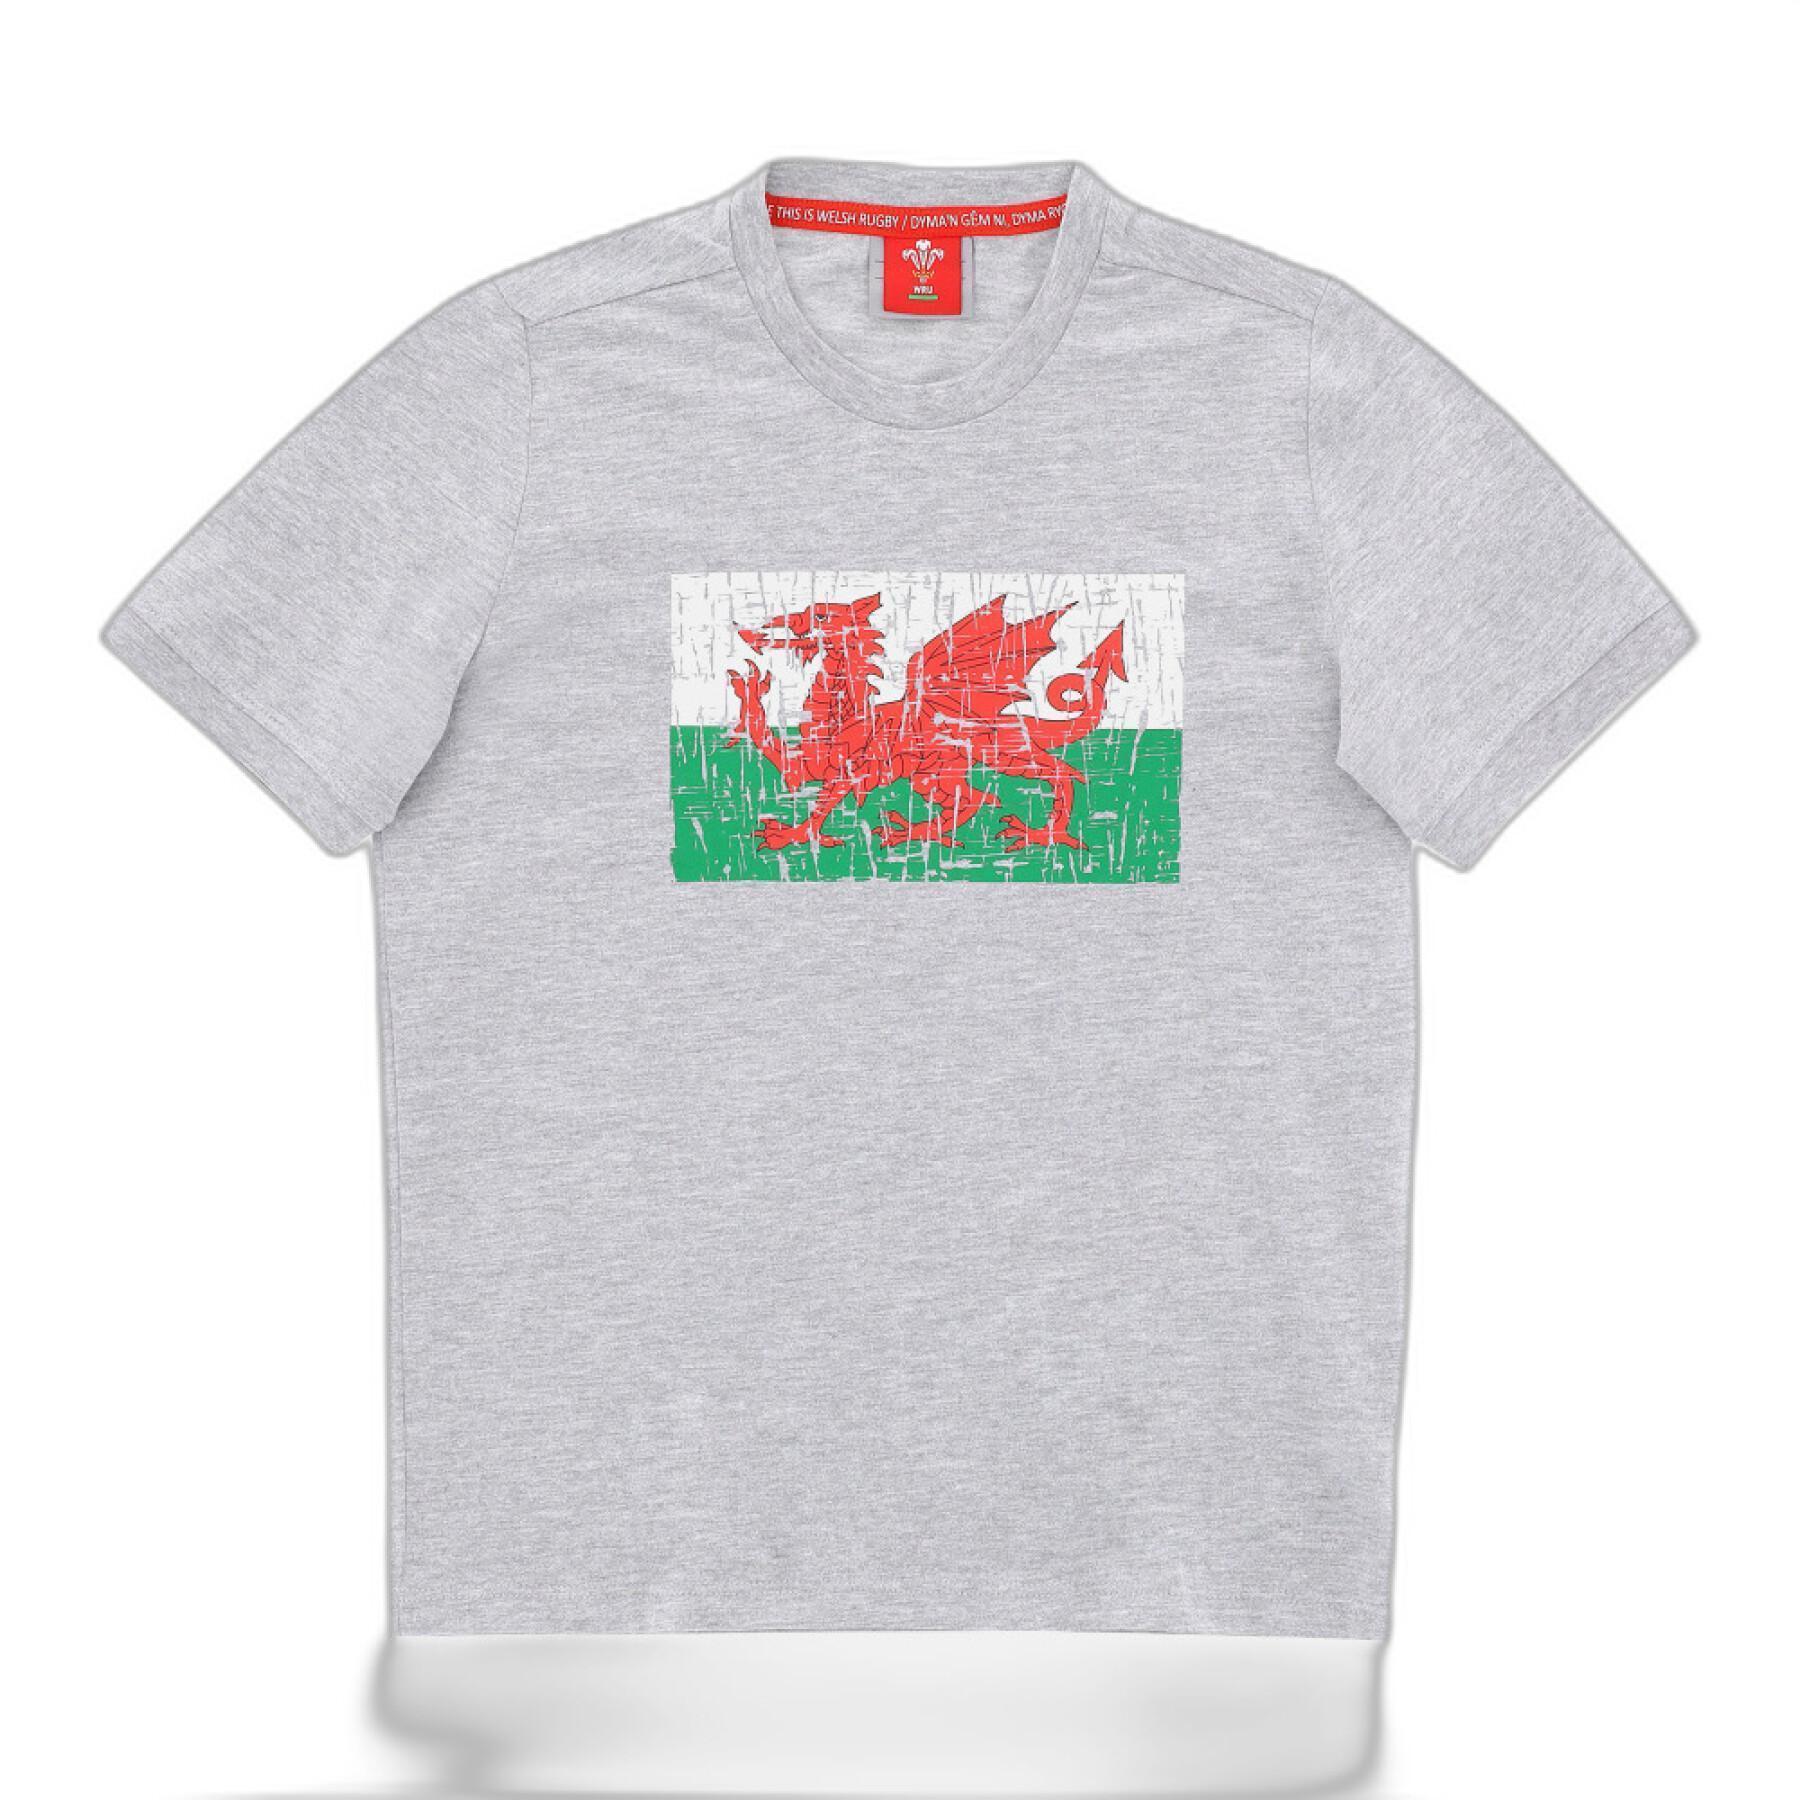 Koszulka dziecięca Pays de Galles Rugby XV 2020/21